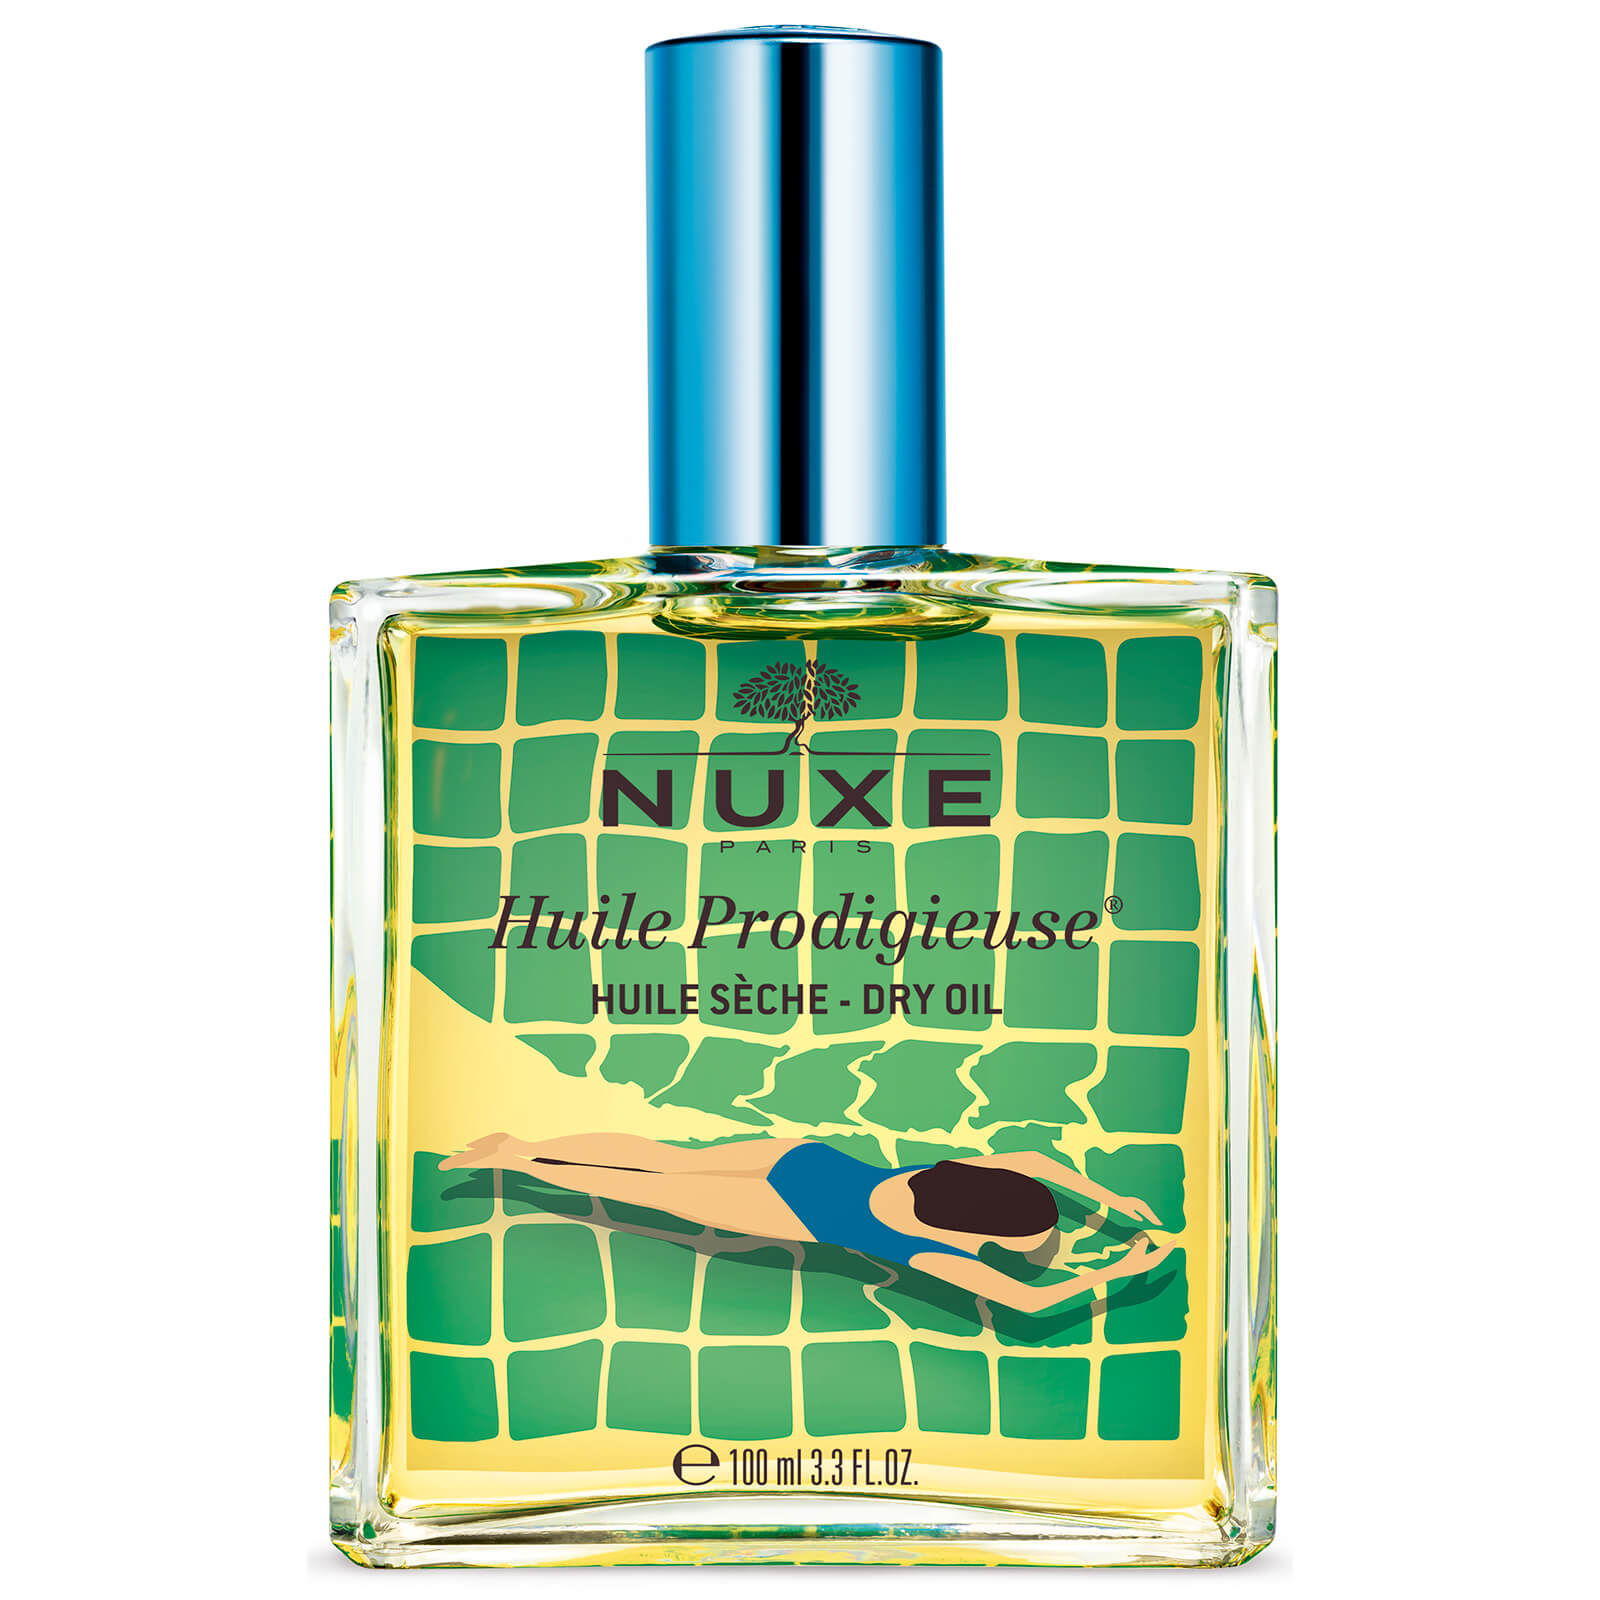 NUXE Huile Prodigieuse Limited Edition Oil 100ml – Blue lookfantastic.com imagine